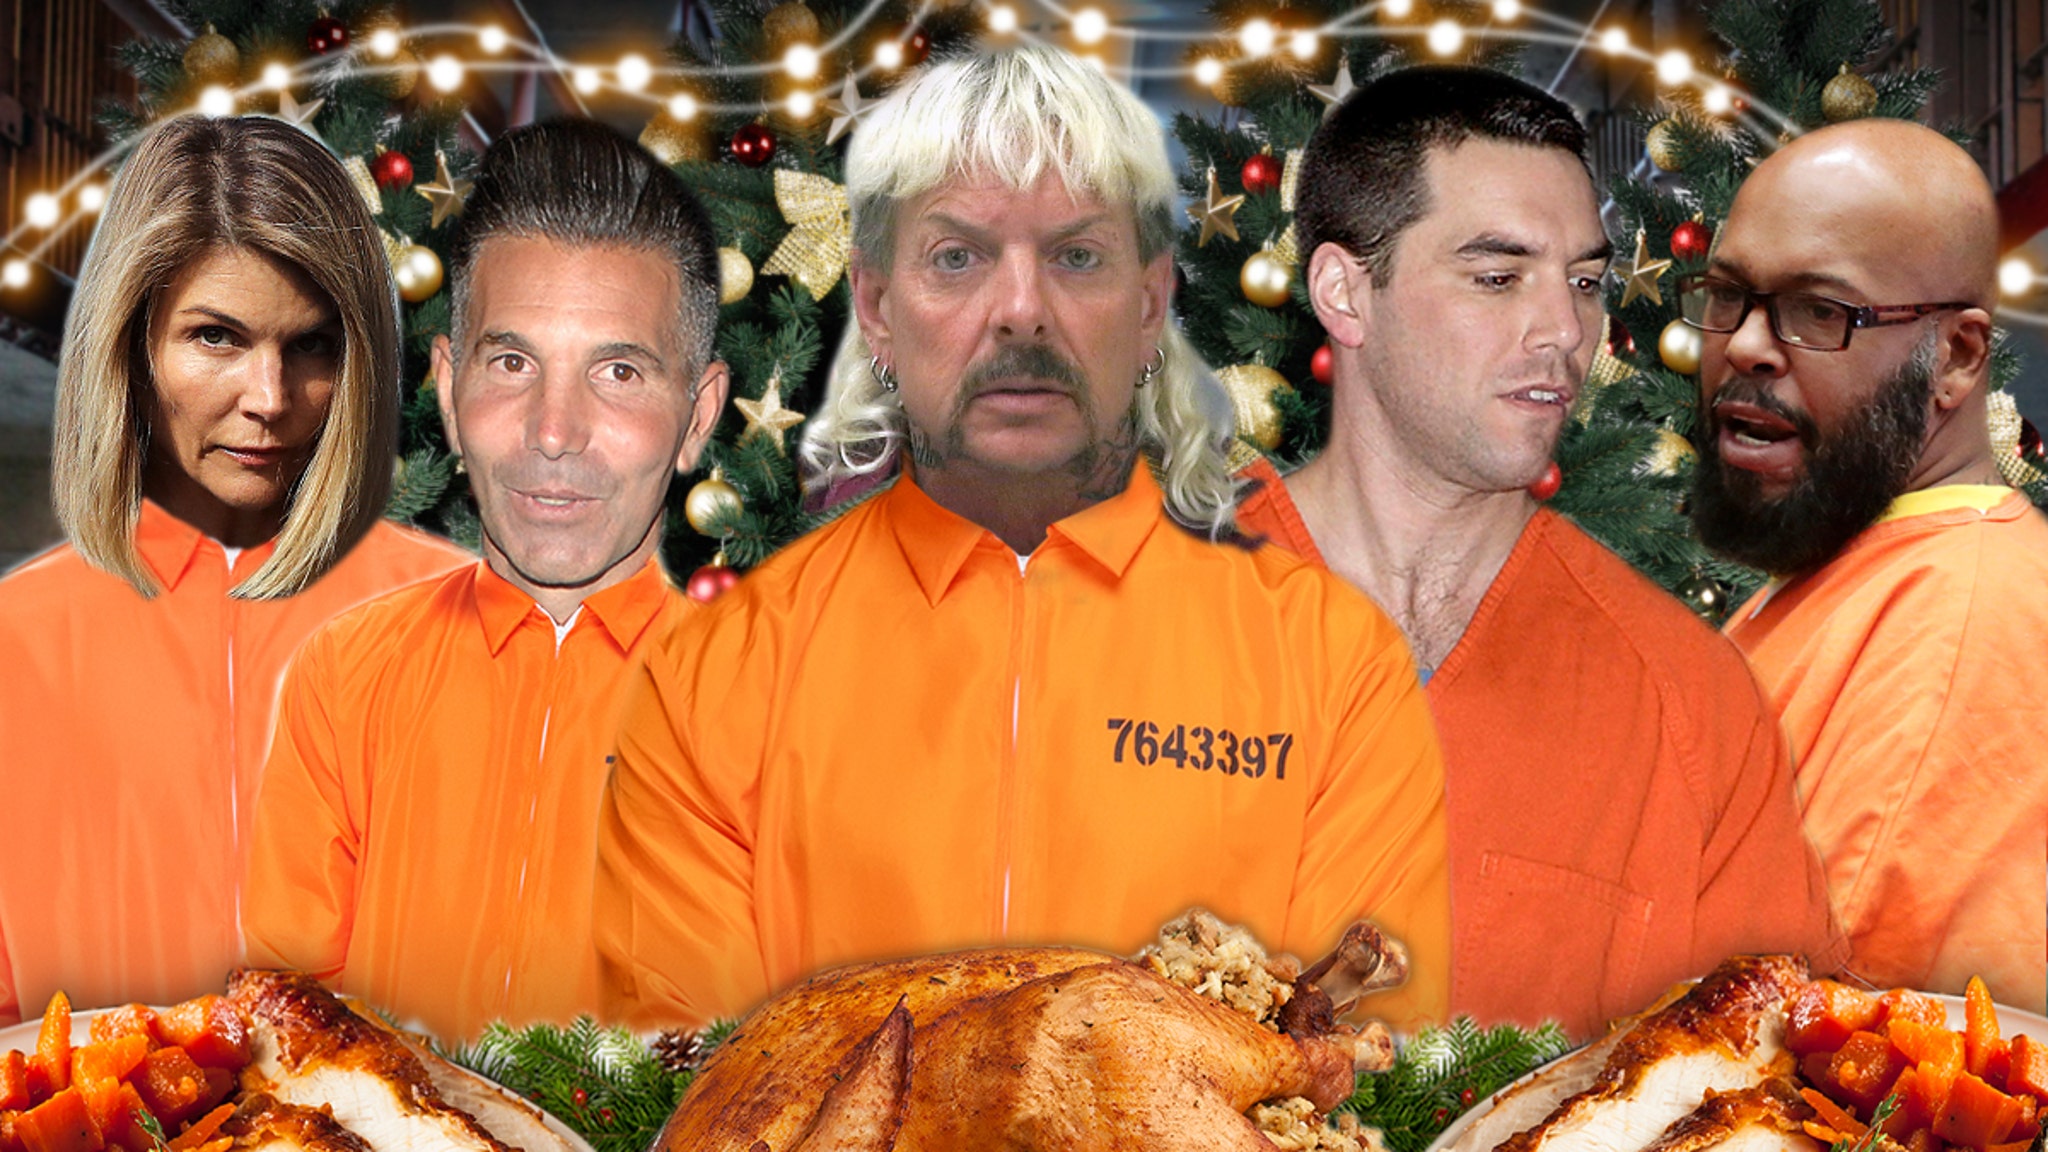 2020 Christmas Prison Meals Revealed for Celebrity Prisoners